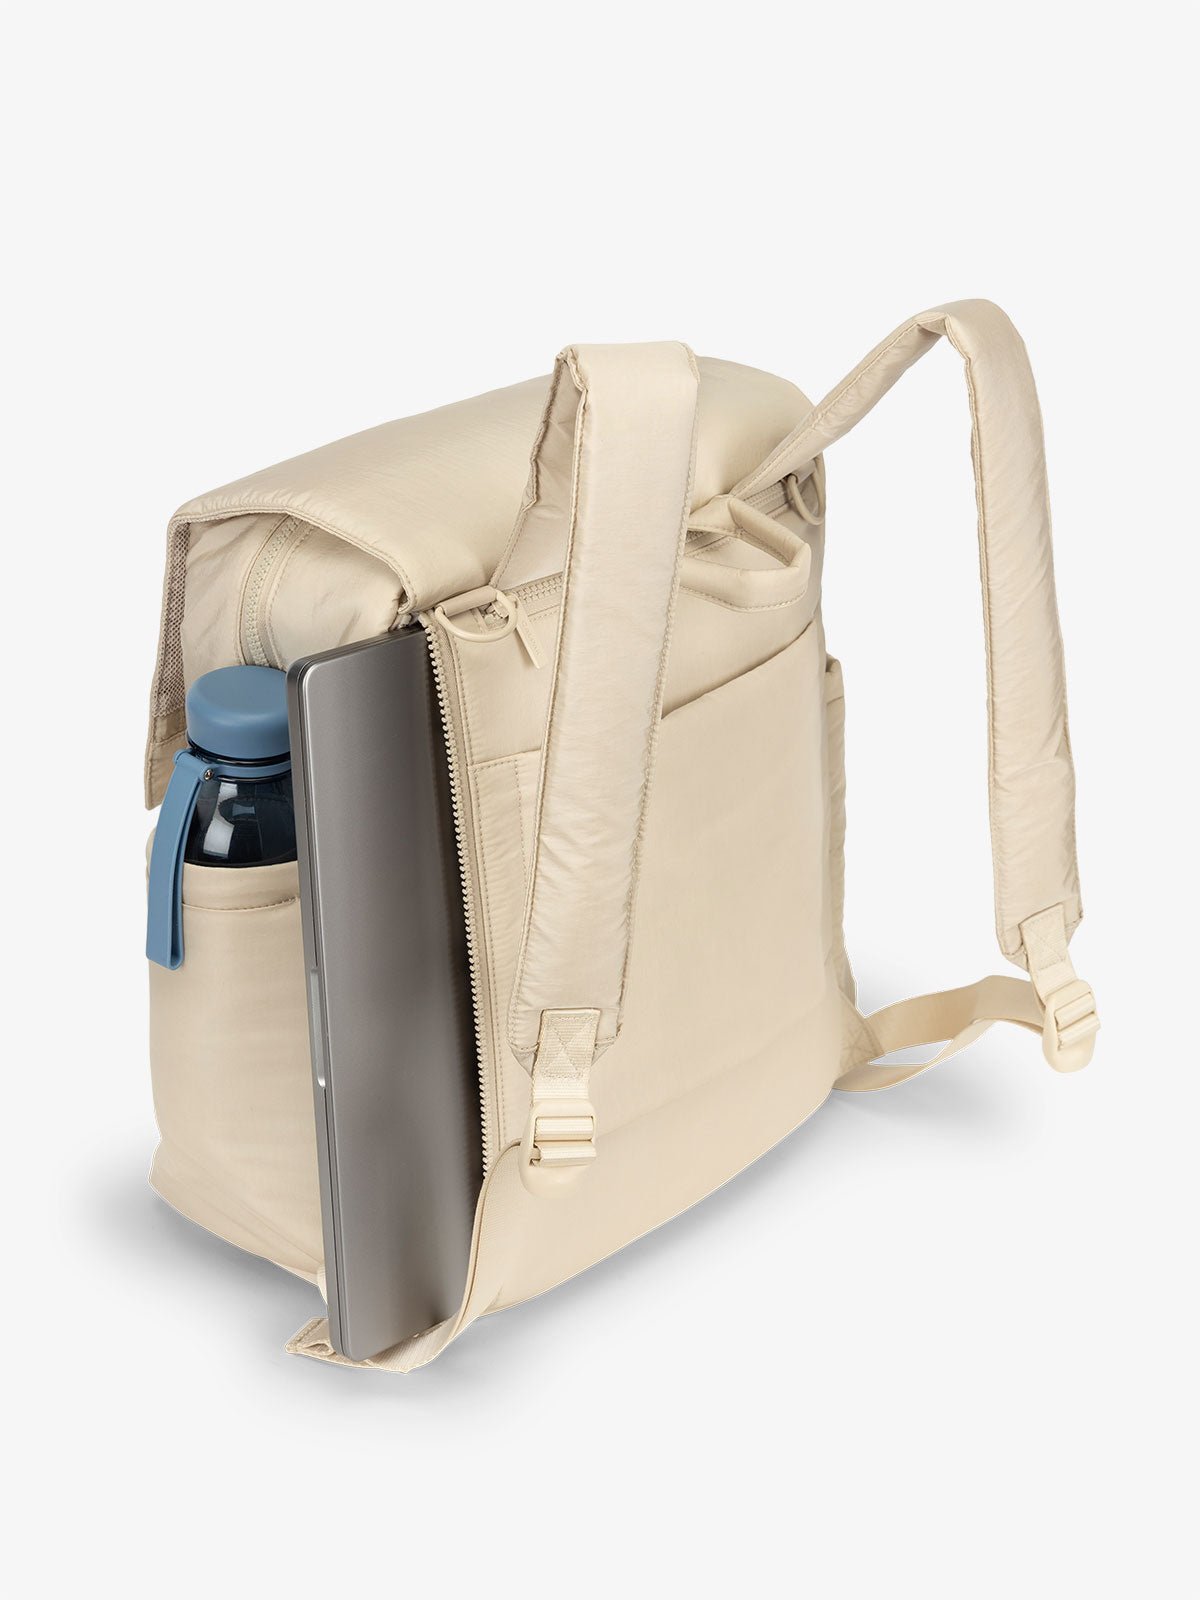 Beige CALPAK diaper backpack with 14 inch laptop sleeve and adjustable shoulder straps